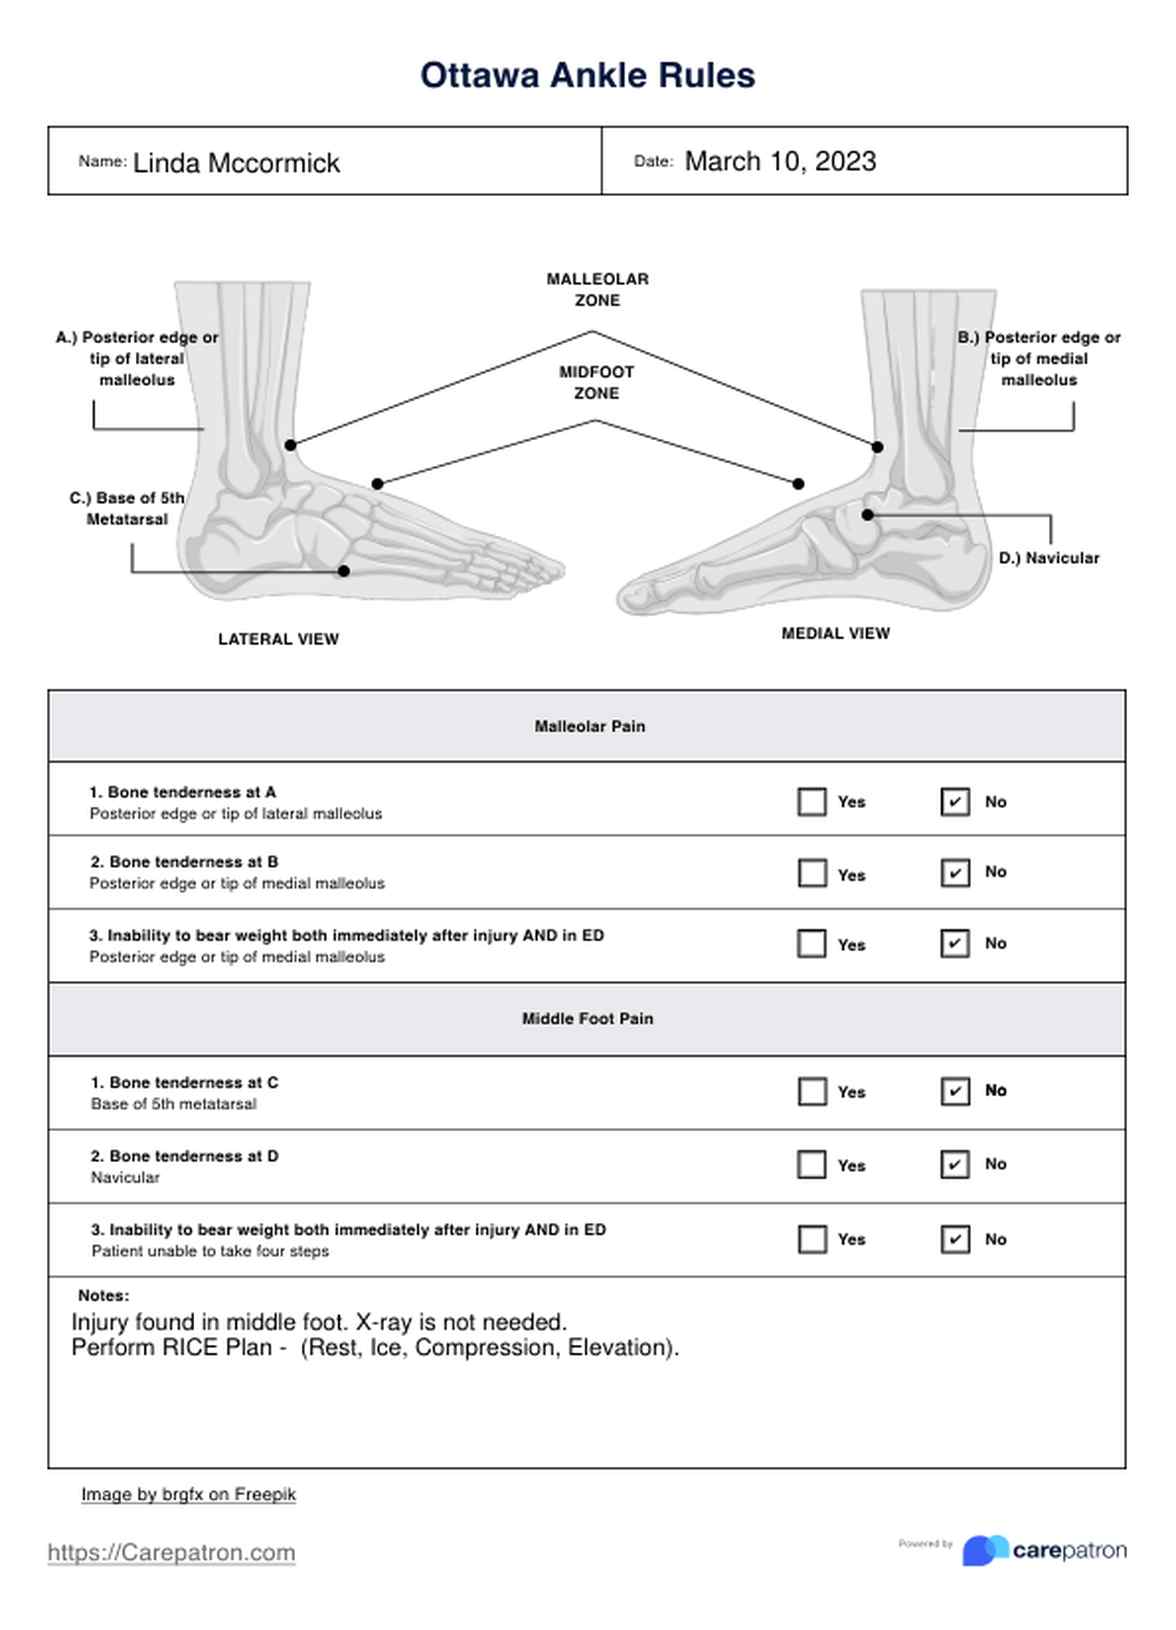 Ottawa Ankle Rules PDF Example